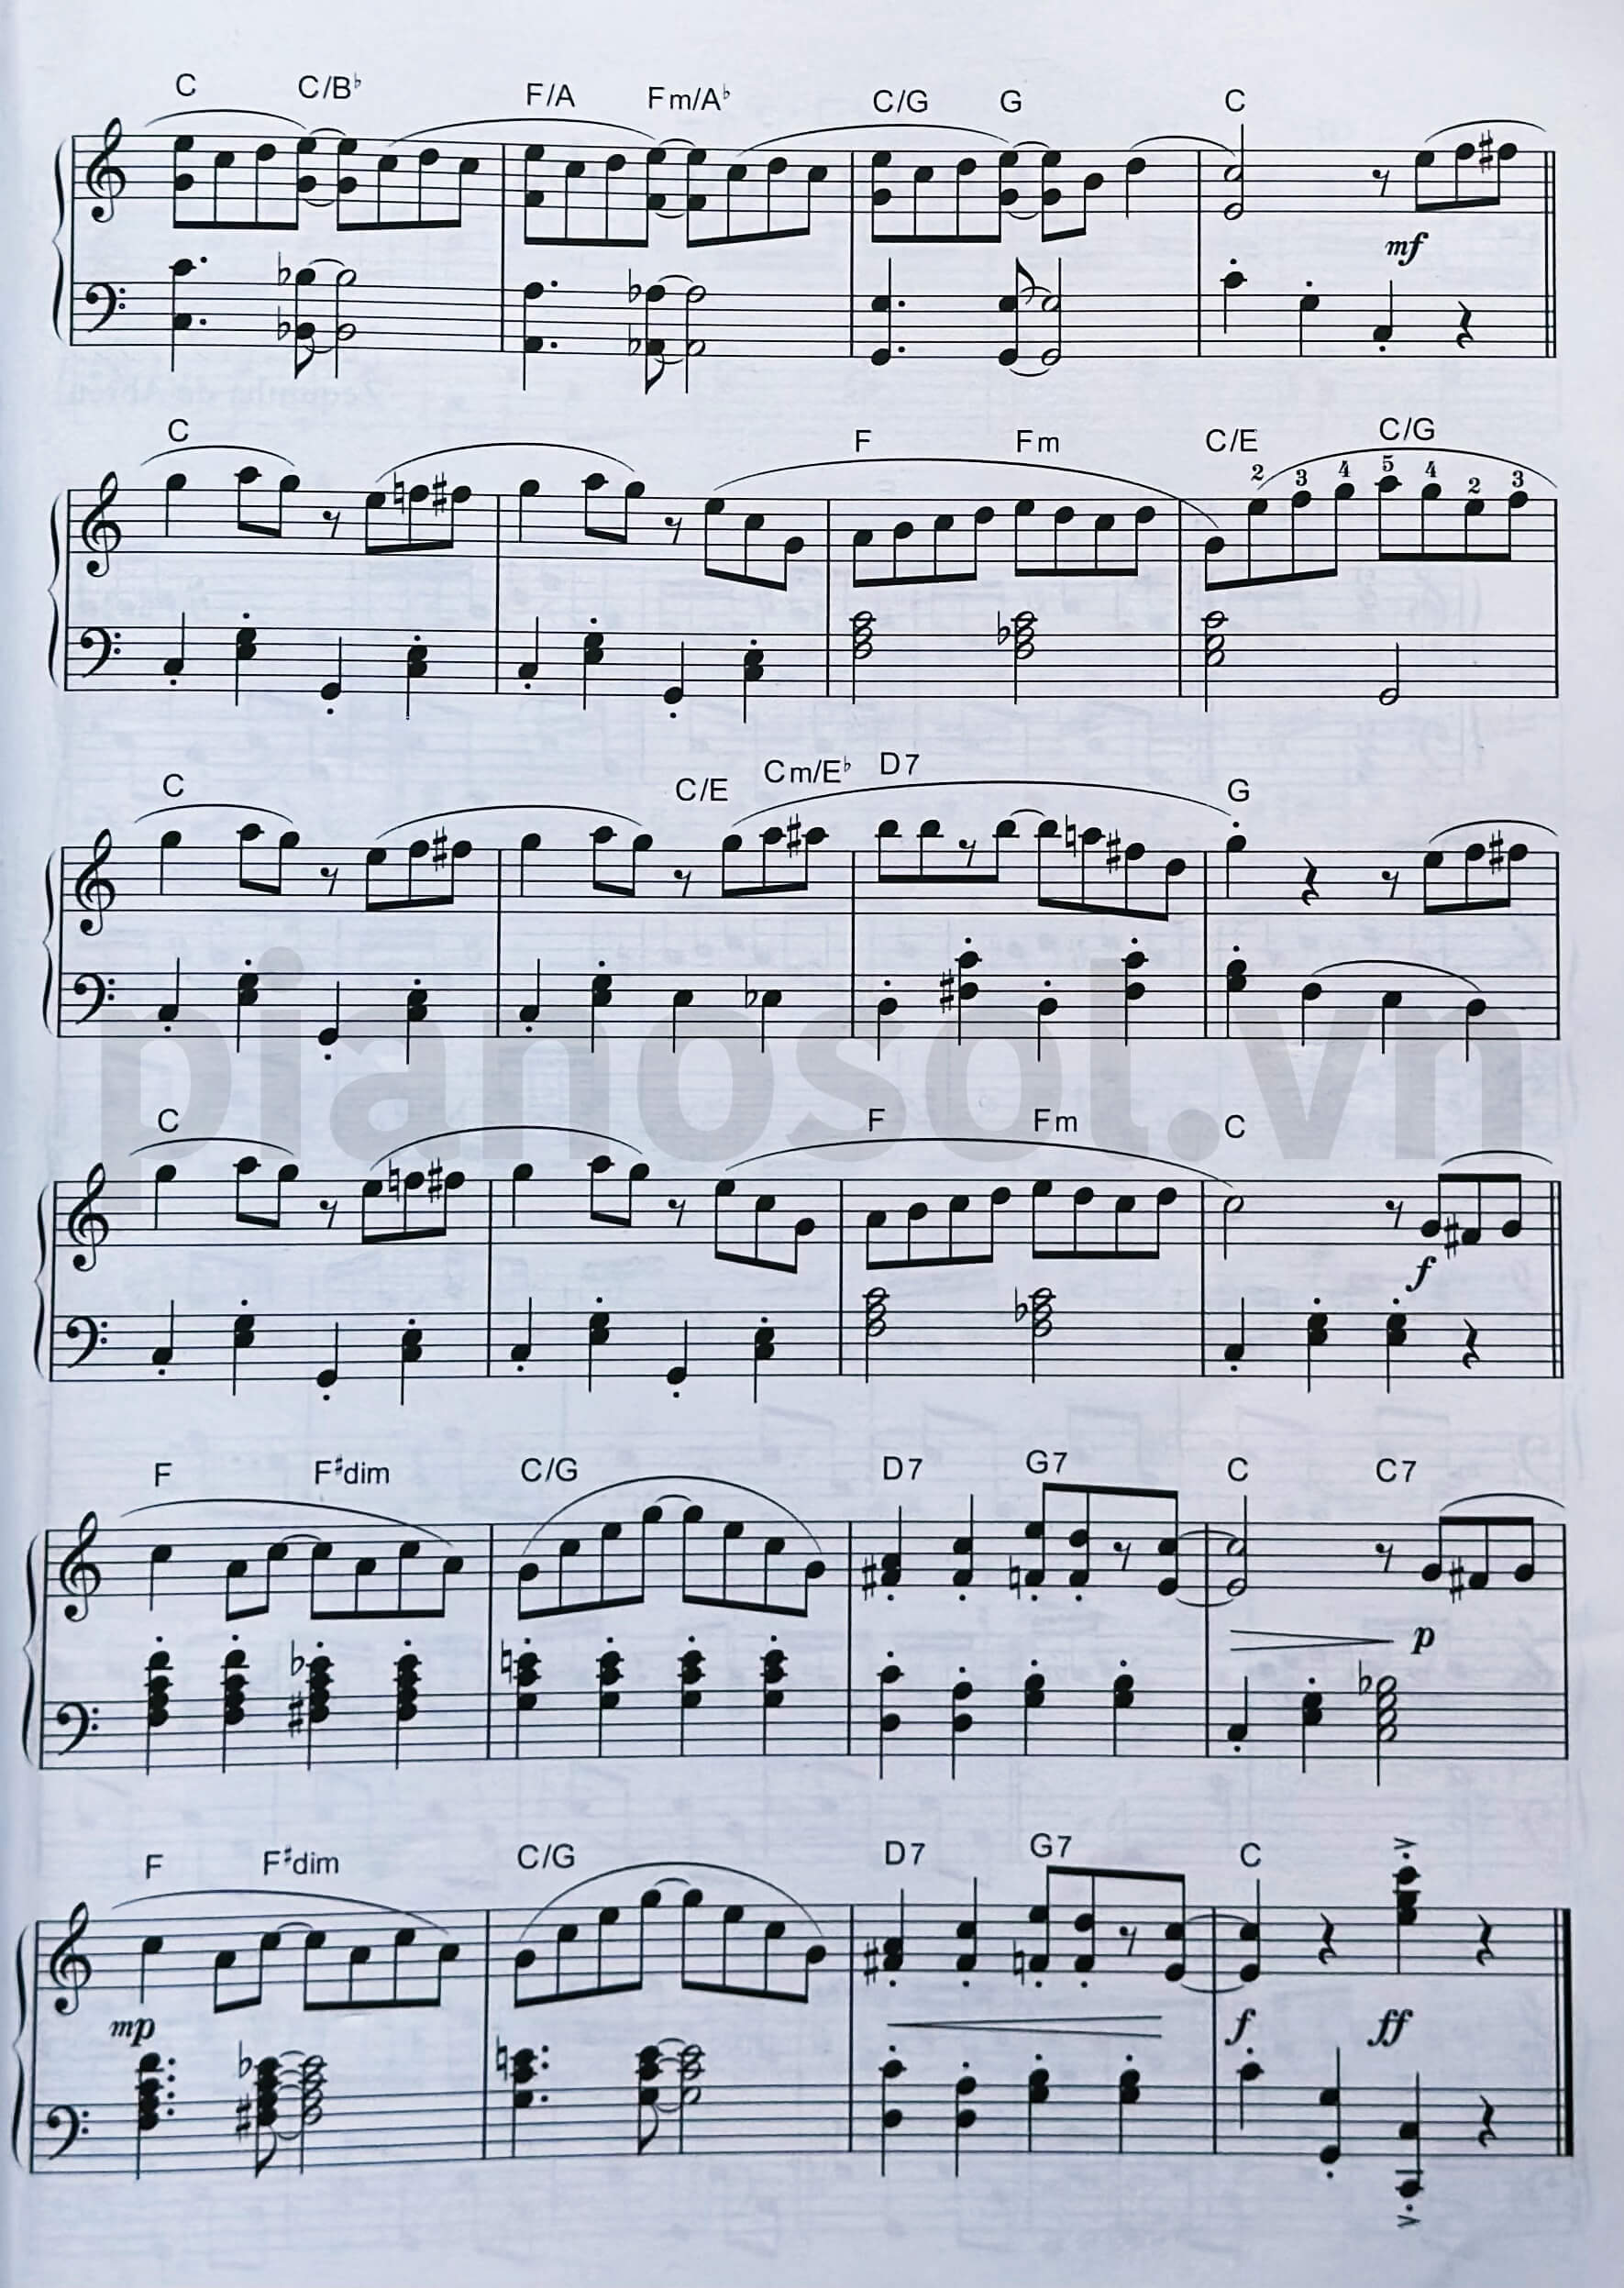 Sheet piano The Entertainer - trang 2